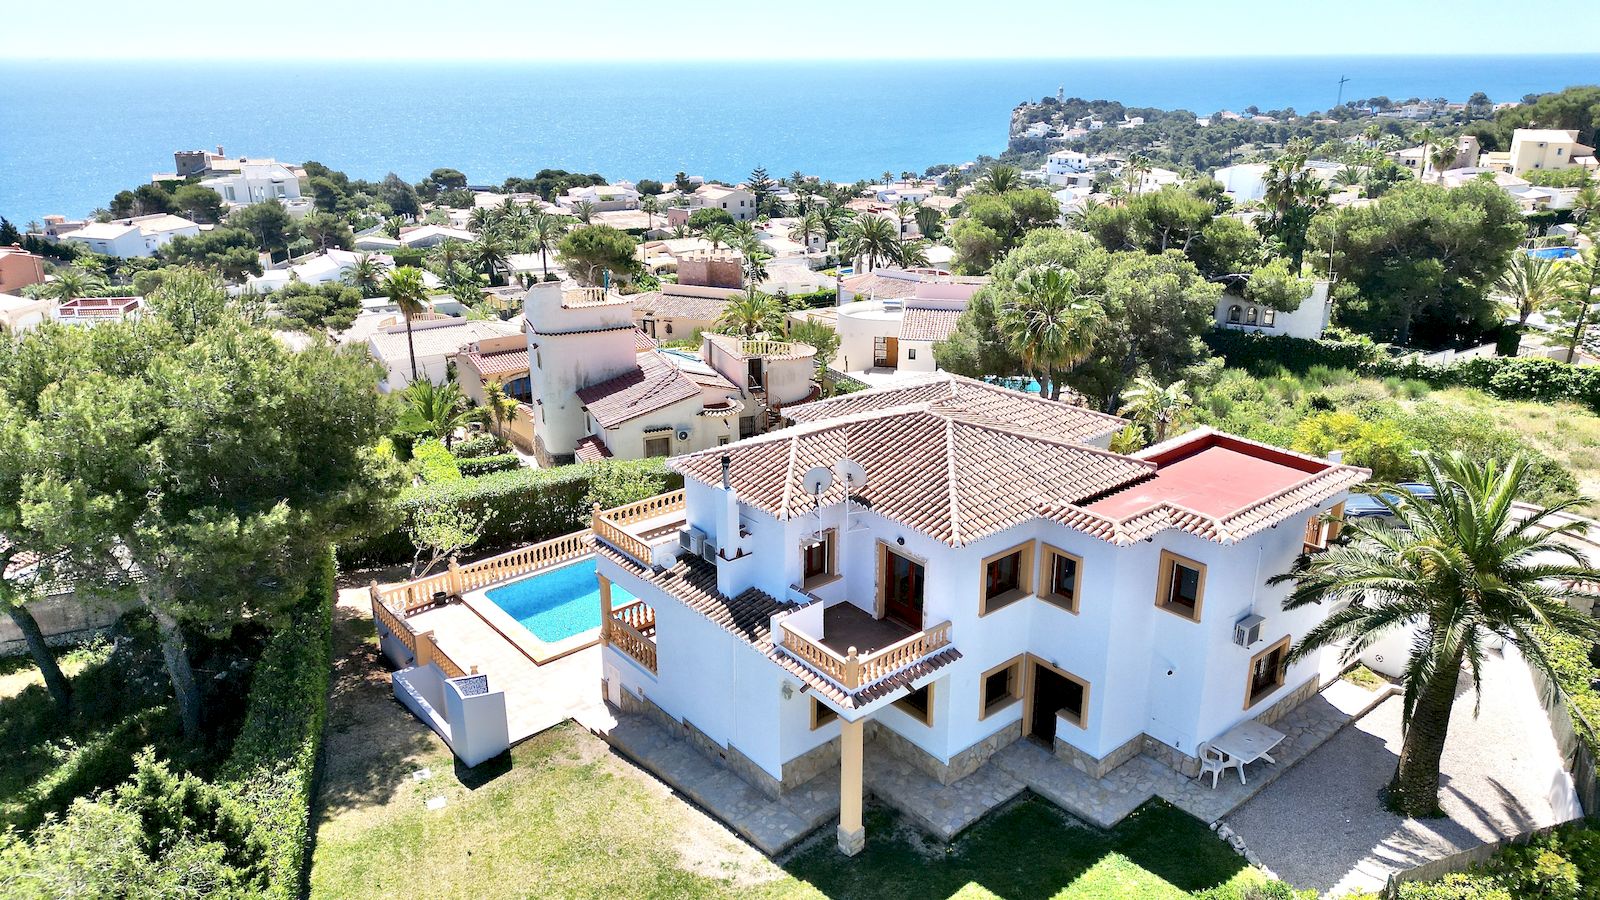 Villa zu verkaufen mit Meerblick in Balcon al Mar - Javea